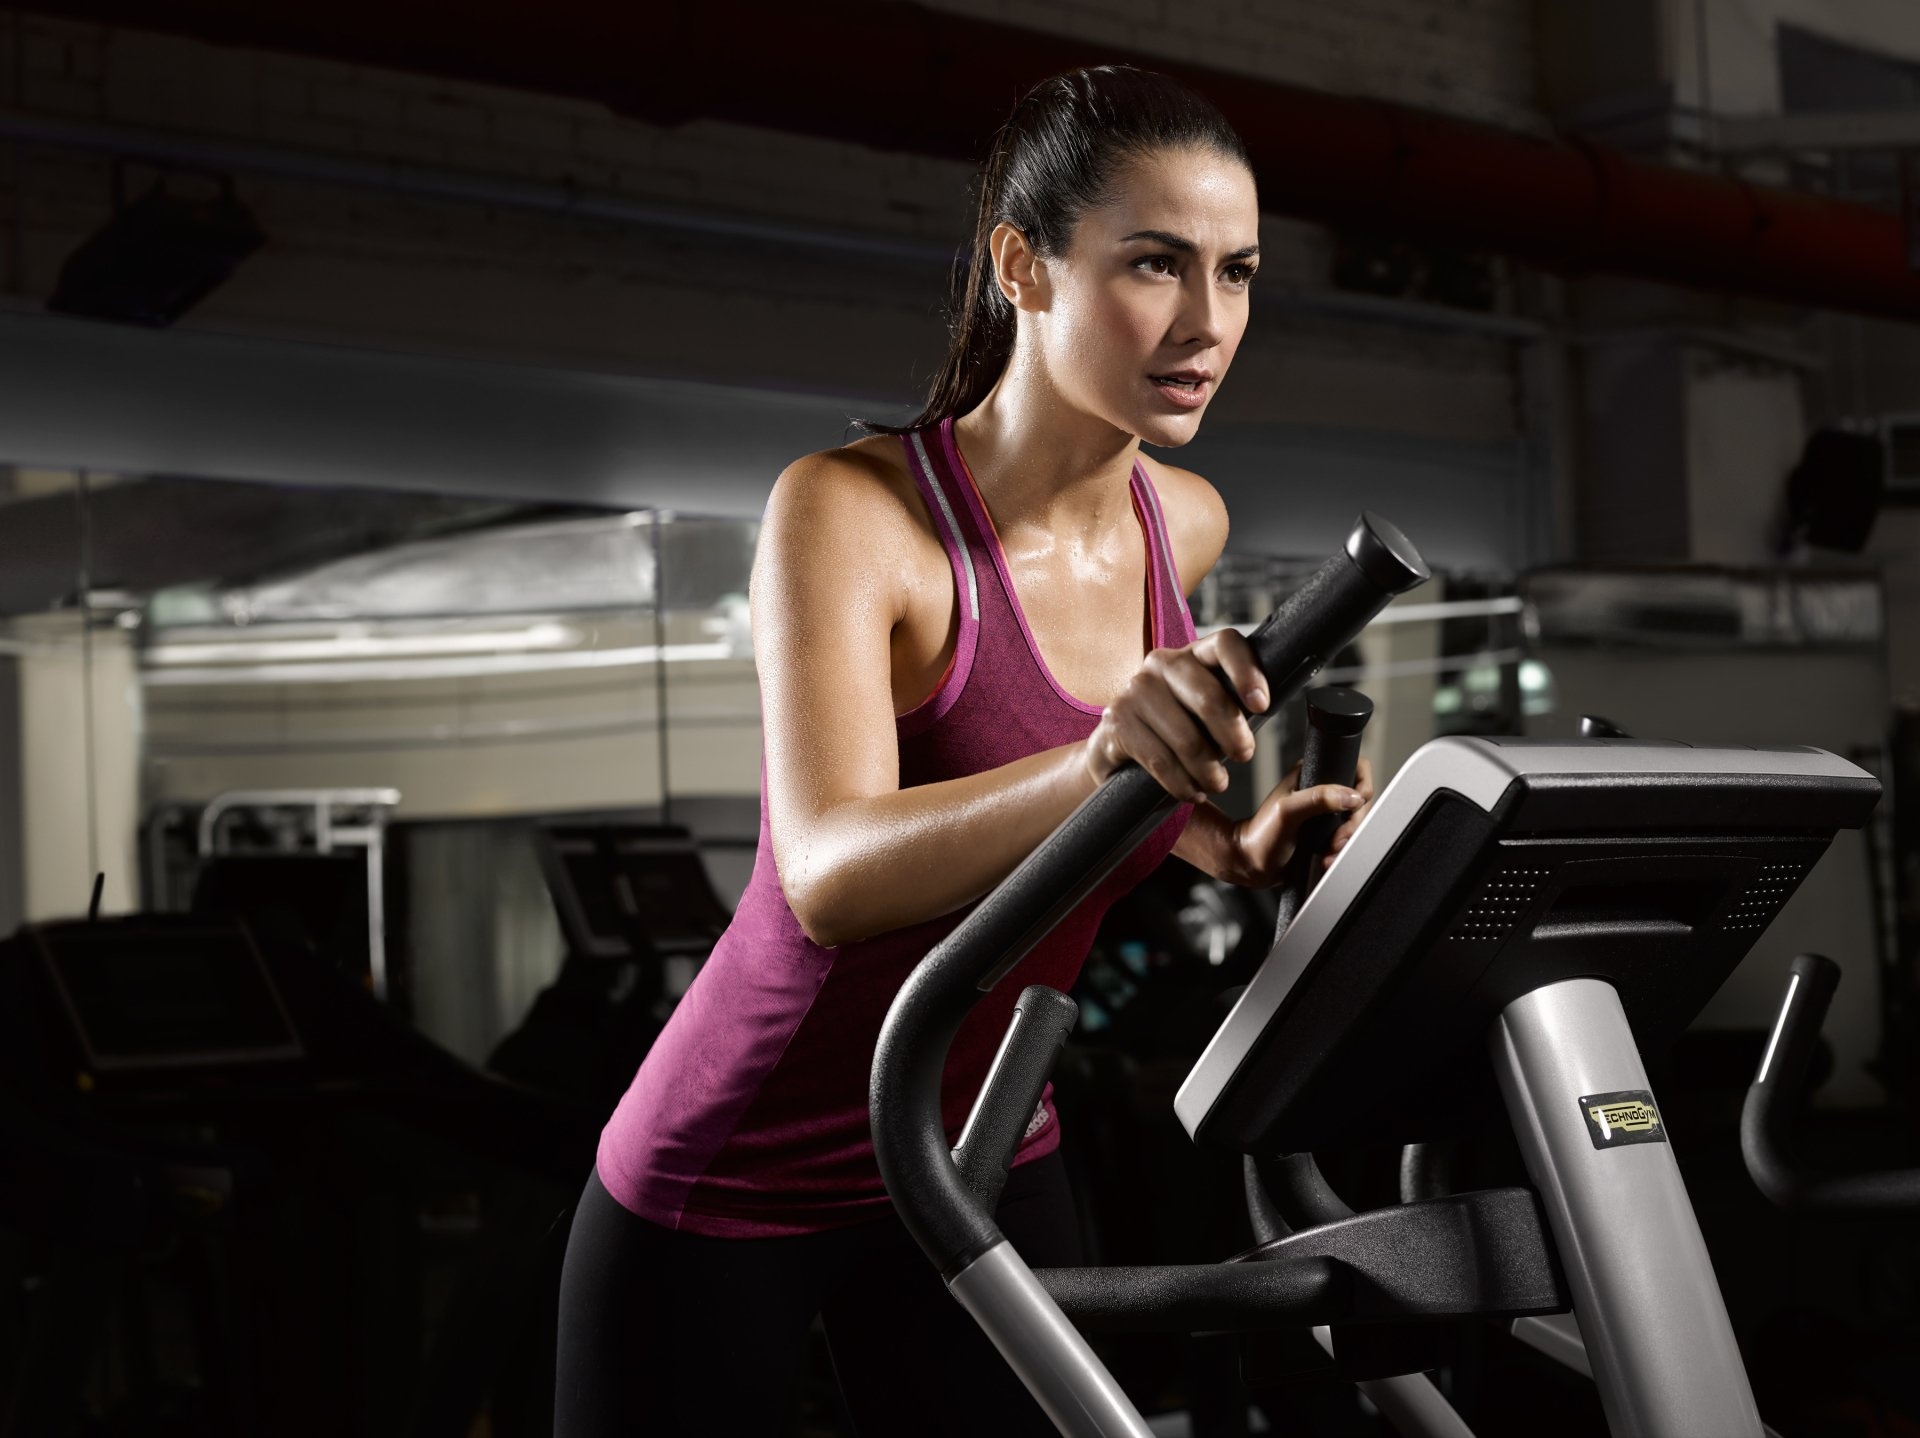 Fitness wallpaper, High-resolution image, Workout motivation, Active lifestyle, 1920x1440 HD Desktop